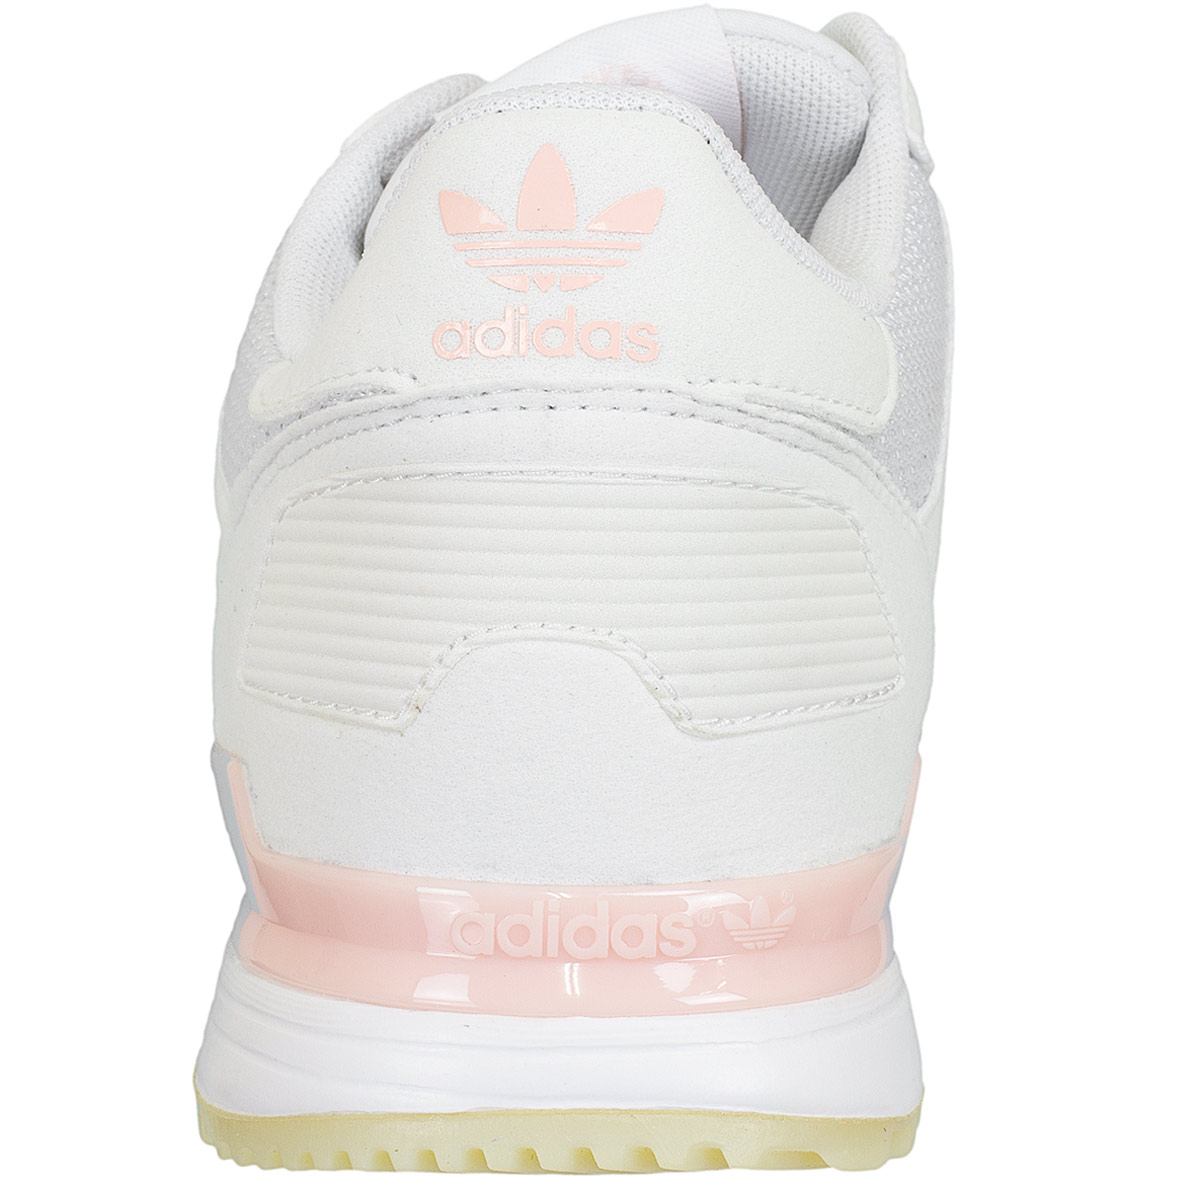 ☆ Adidas Originals Damen Sneaker ZX 700 weiß/icepink - hier bestellen!